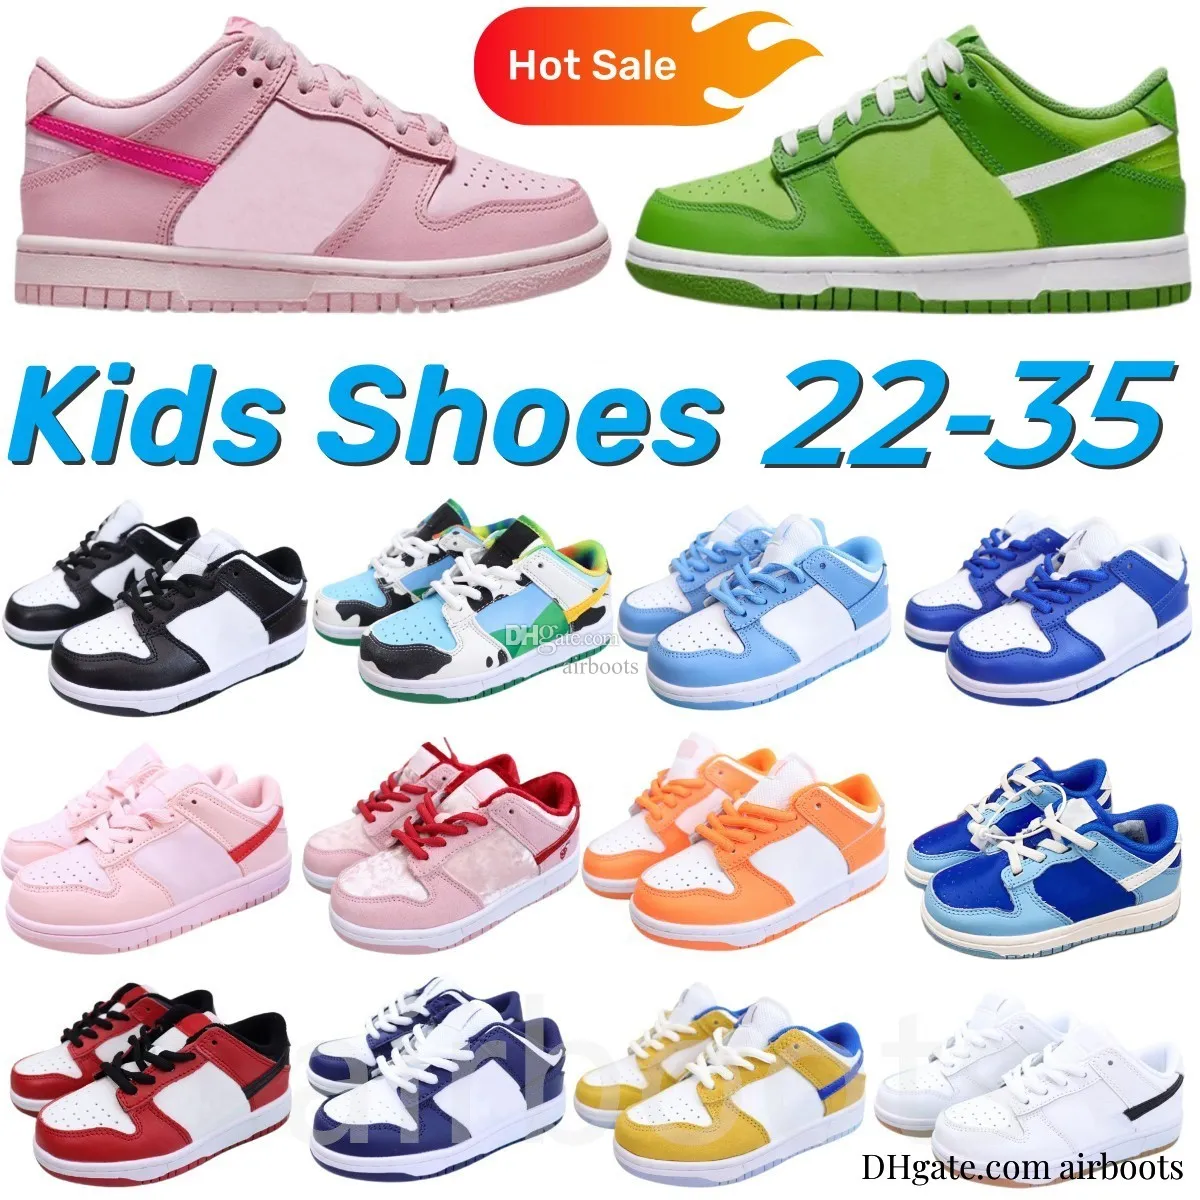 Kids Shoes low boys Sports Girls baby sneakers designer trainers Running shoe black Panda kid youth toddler infants triple pink strangelove UNC size eur 22-35